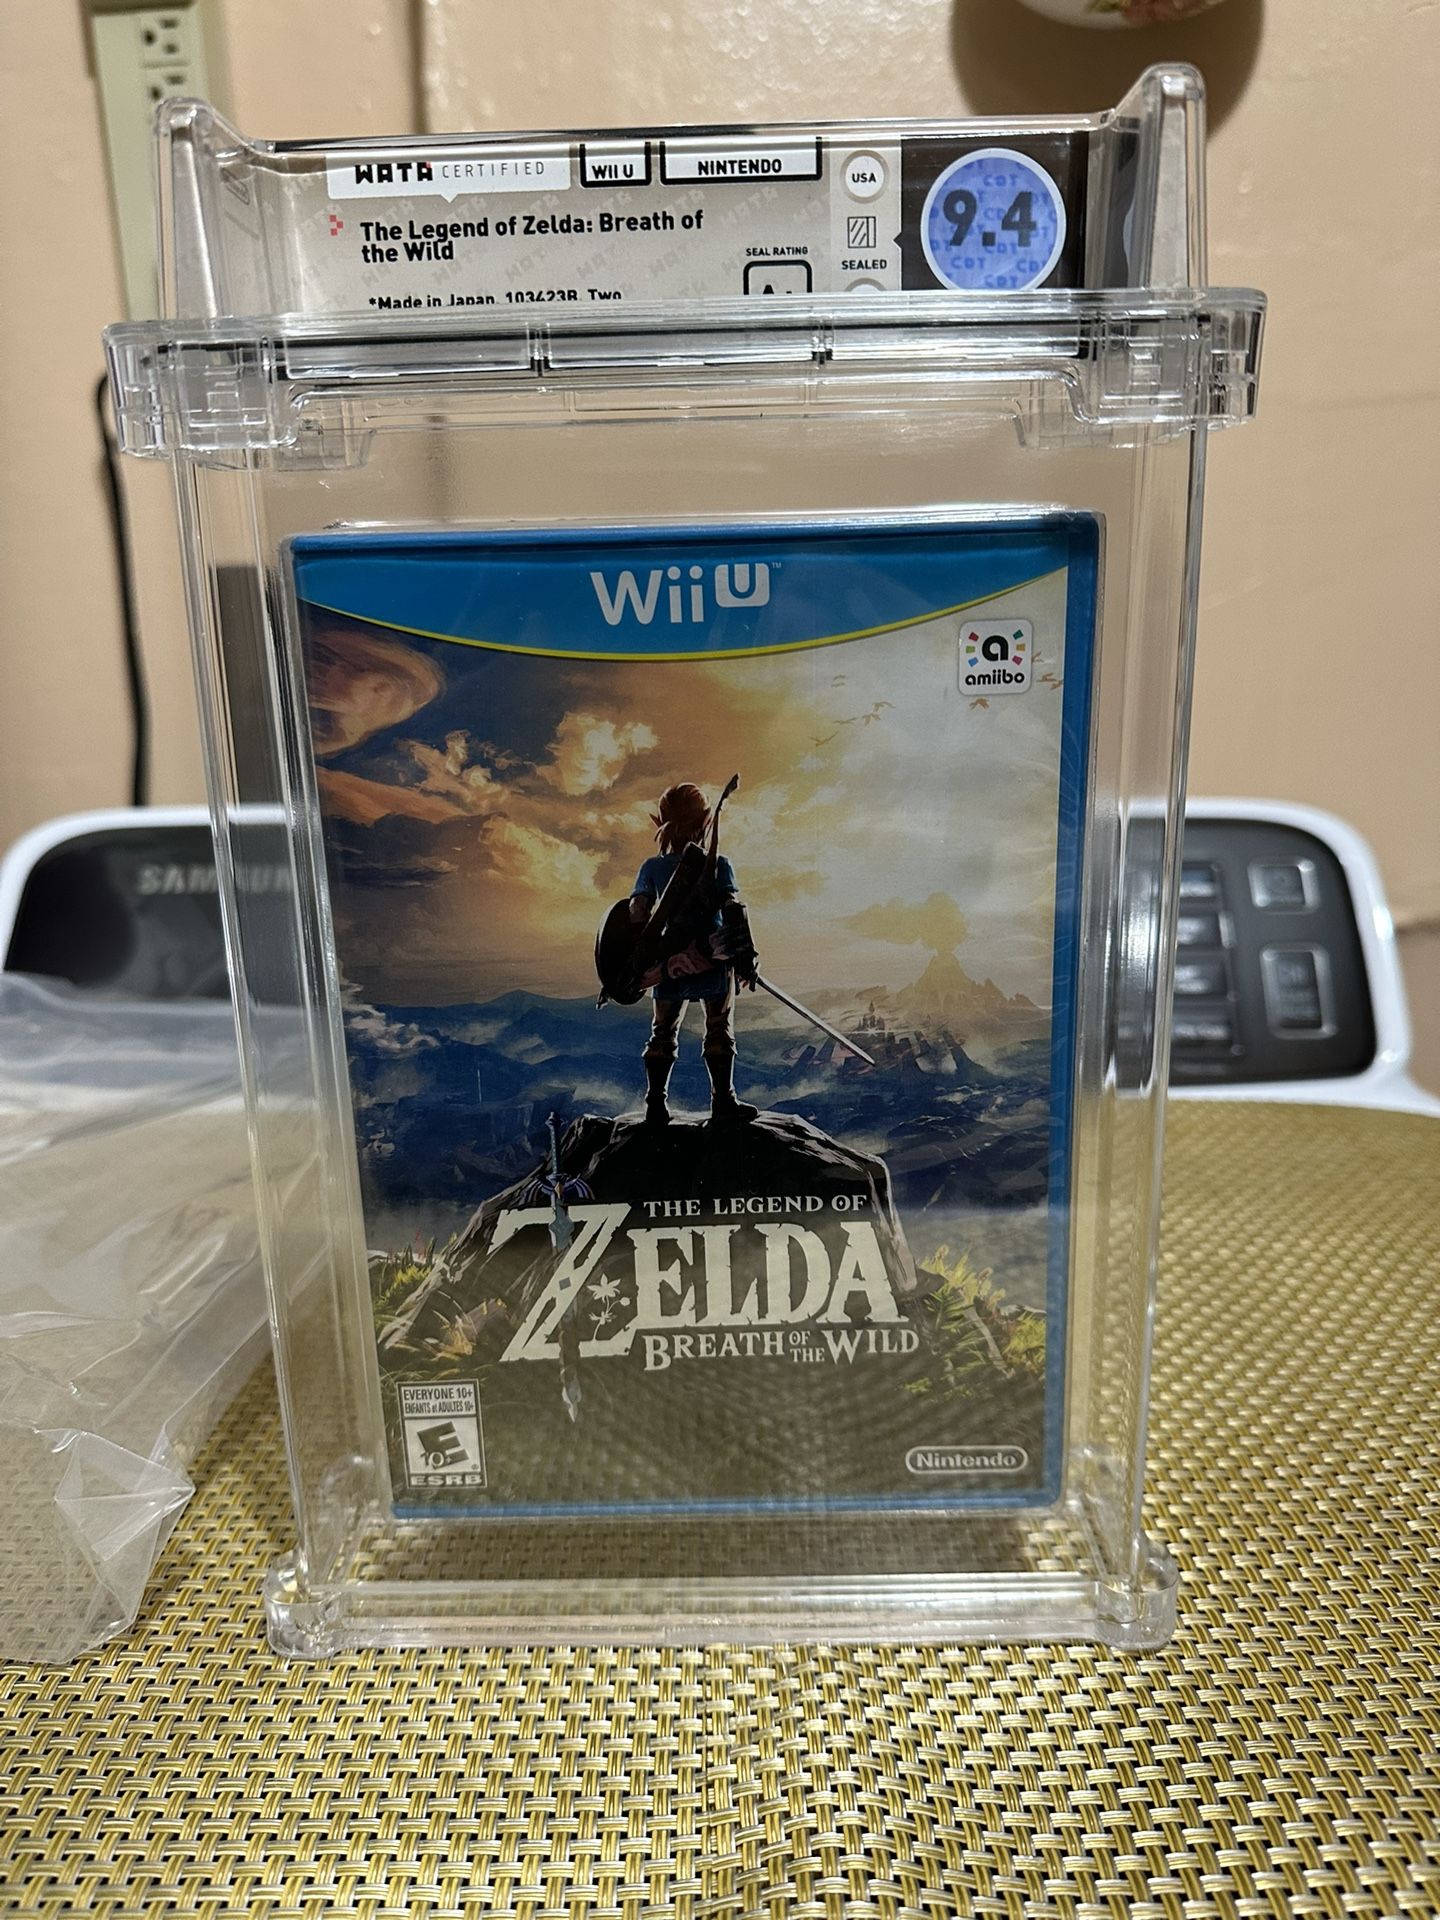 The Legend of Zelda: Breath of the Wild (Nintendo Wii U) Wata Graded 9.4 A+ NEW